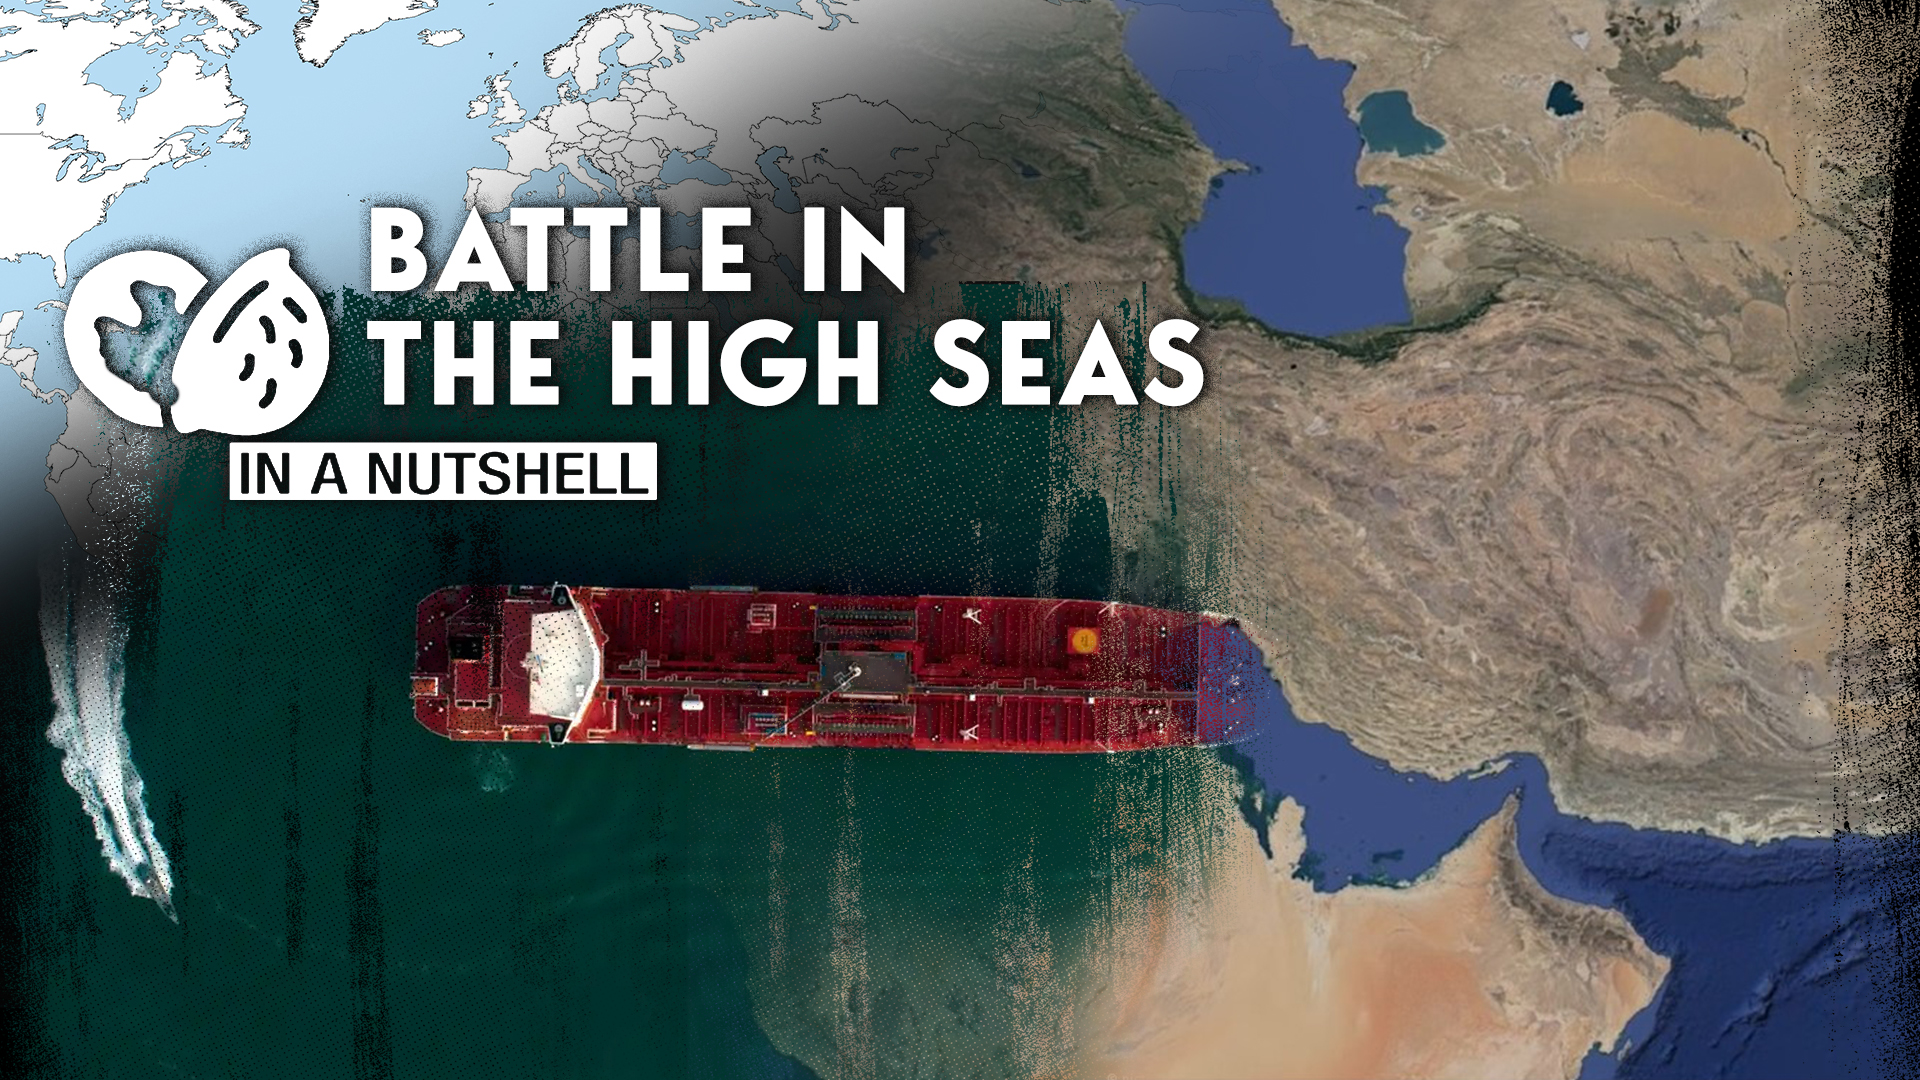 Battle in the high seas